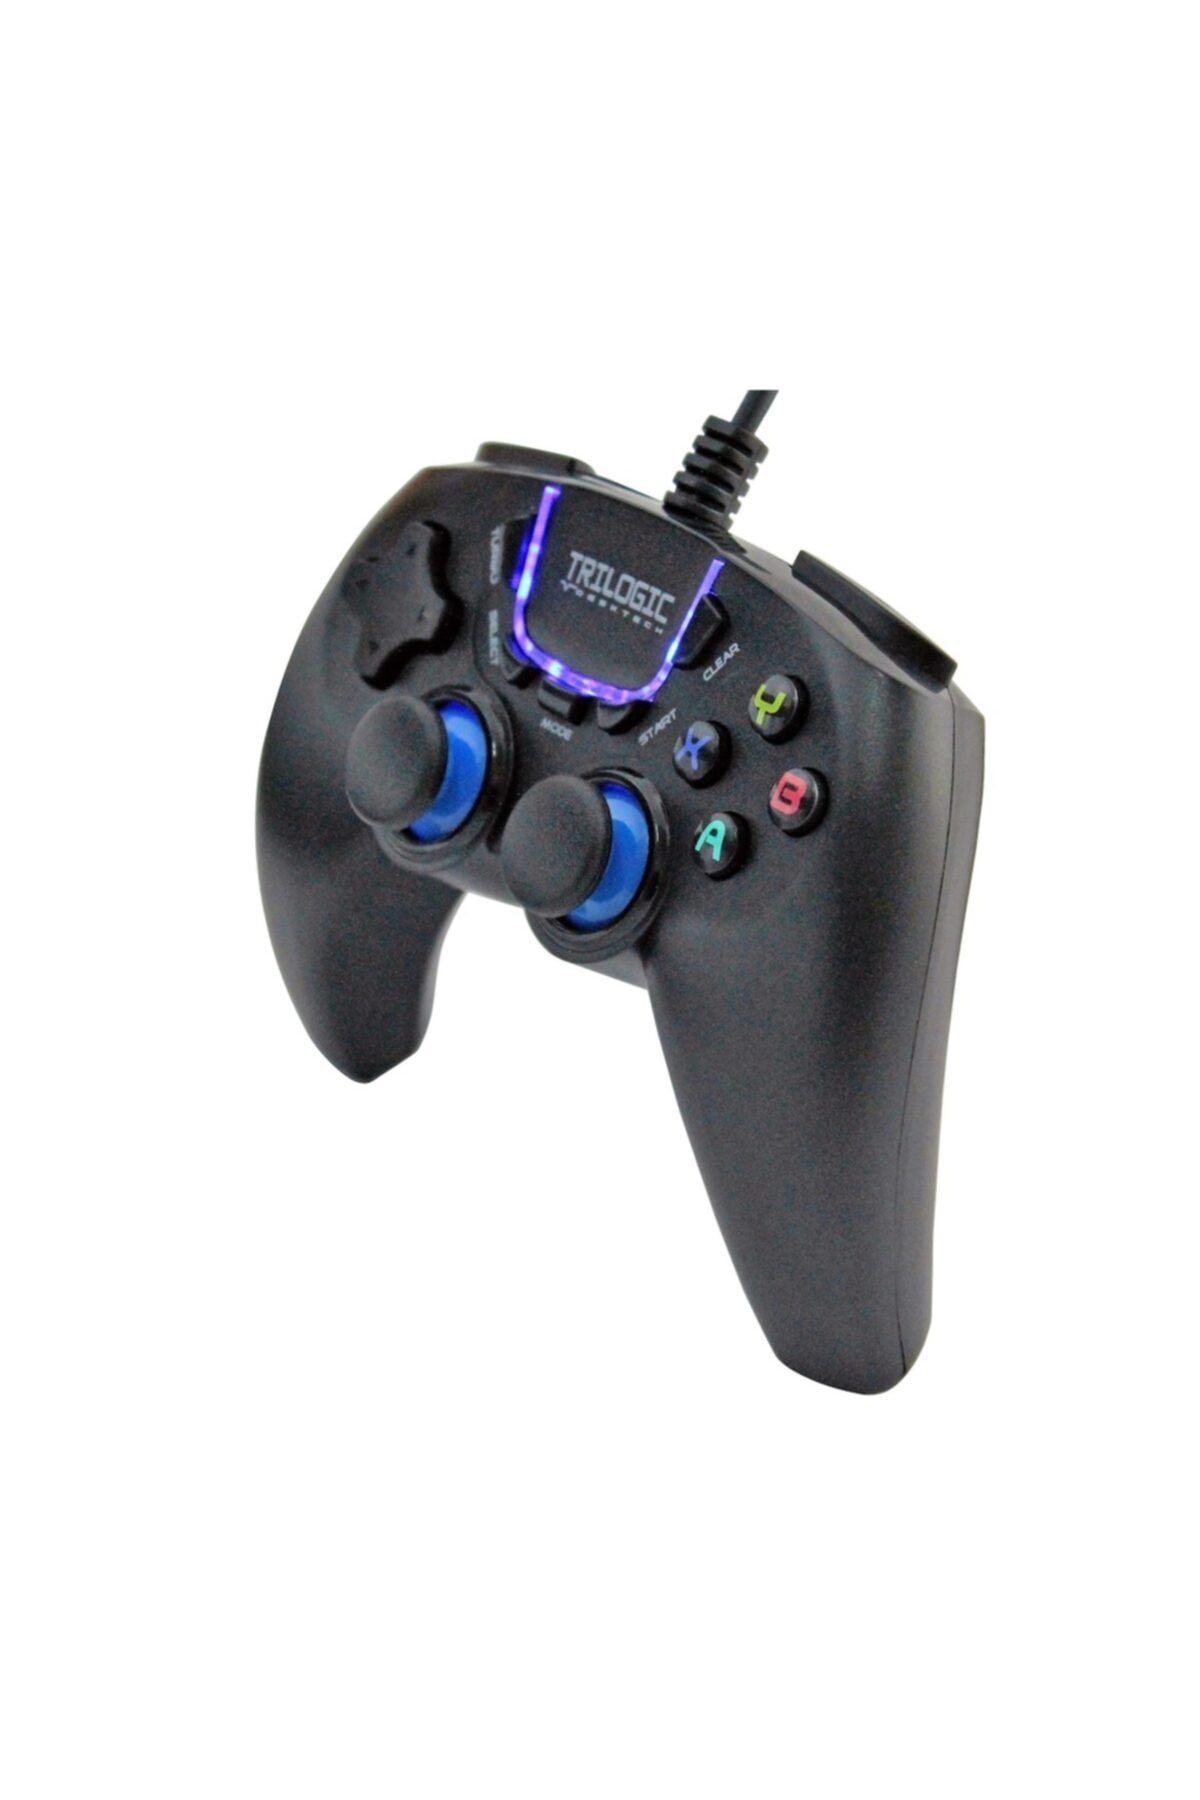 TRILOGIC Cobra Gp818 turbo usb Gamepad Oyun Kolu Joystick Mavi